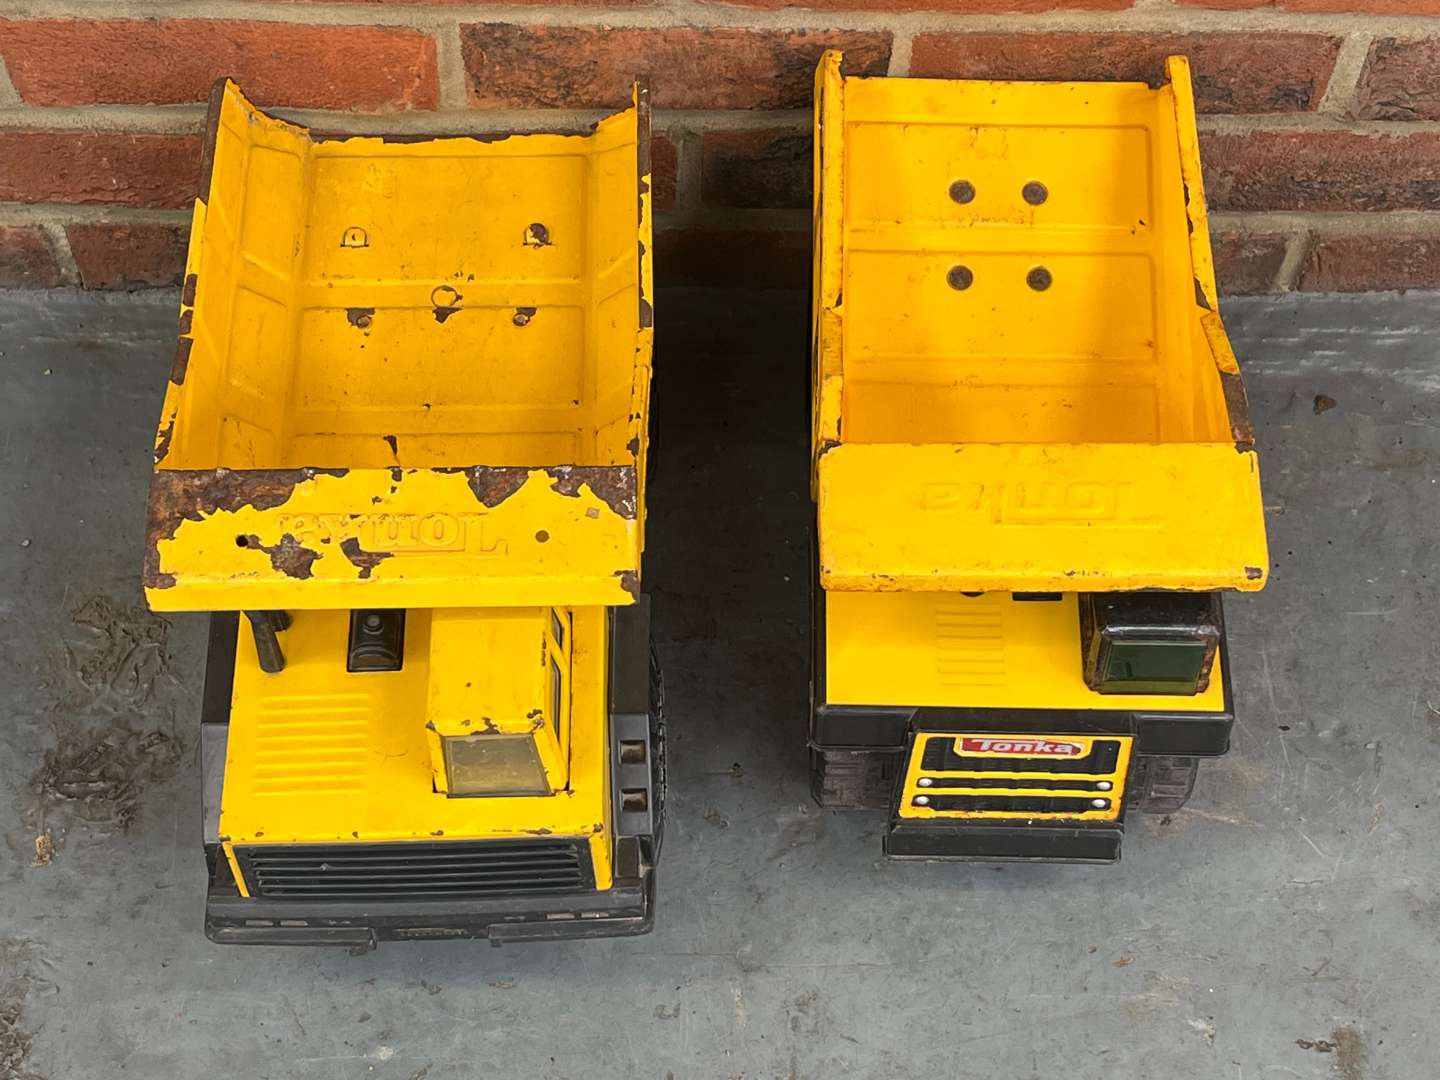 <p>Two Tonka Tin Plate Toy Trucks</p>